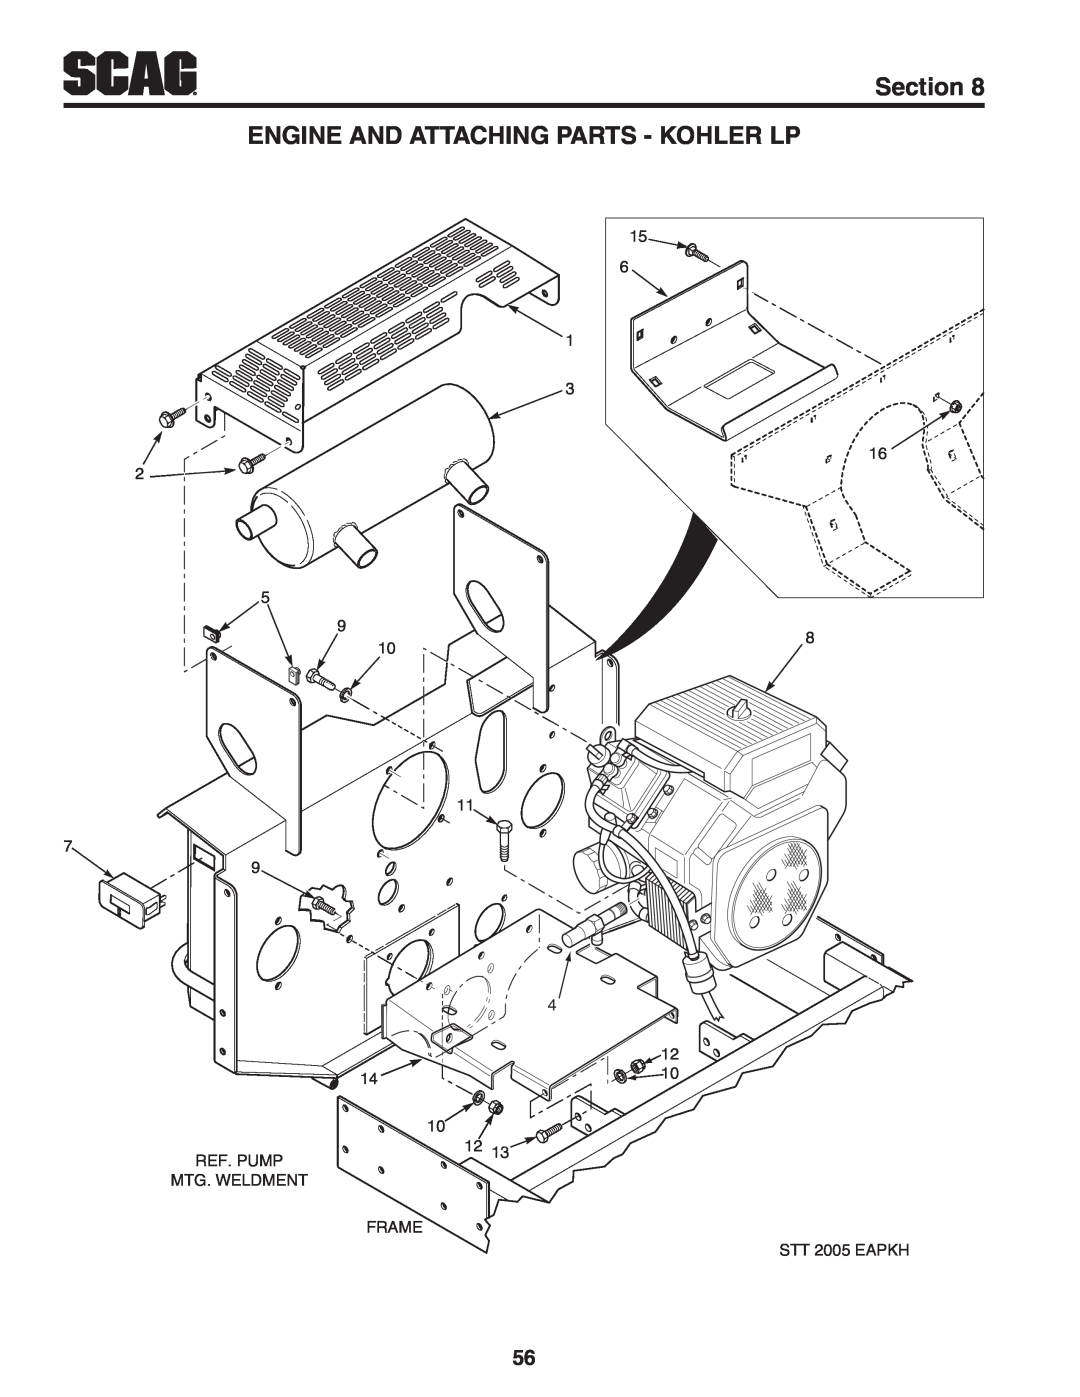 Scag Power Equipment STT52V-25CH-LP Engine And Attaching Parts - Kohler Lp, Section, Ref. Pump, Mtg. Weldment, Frame 